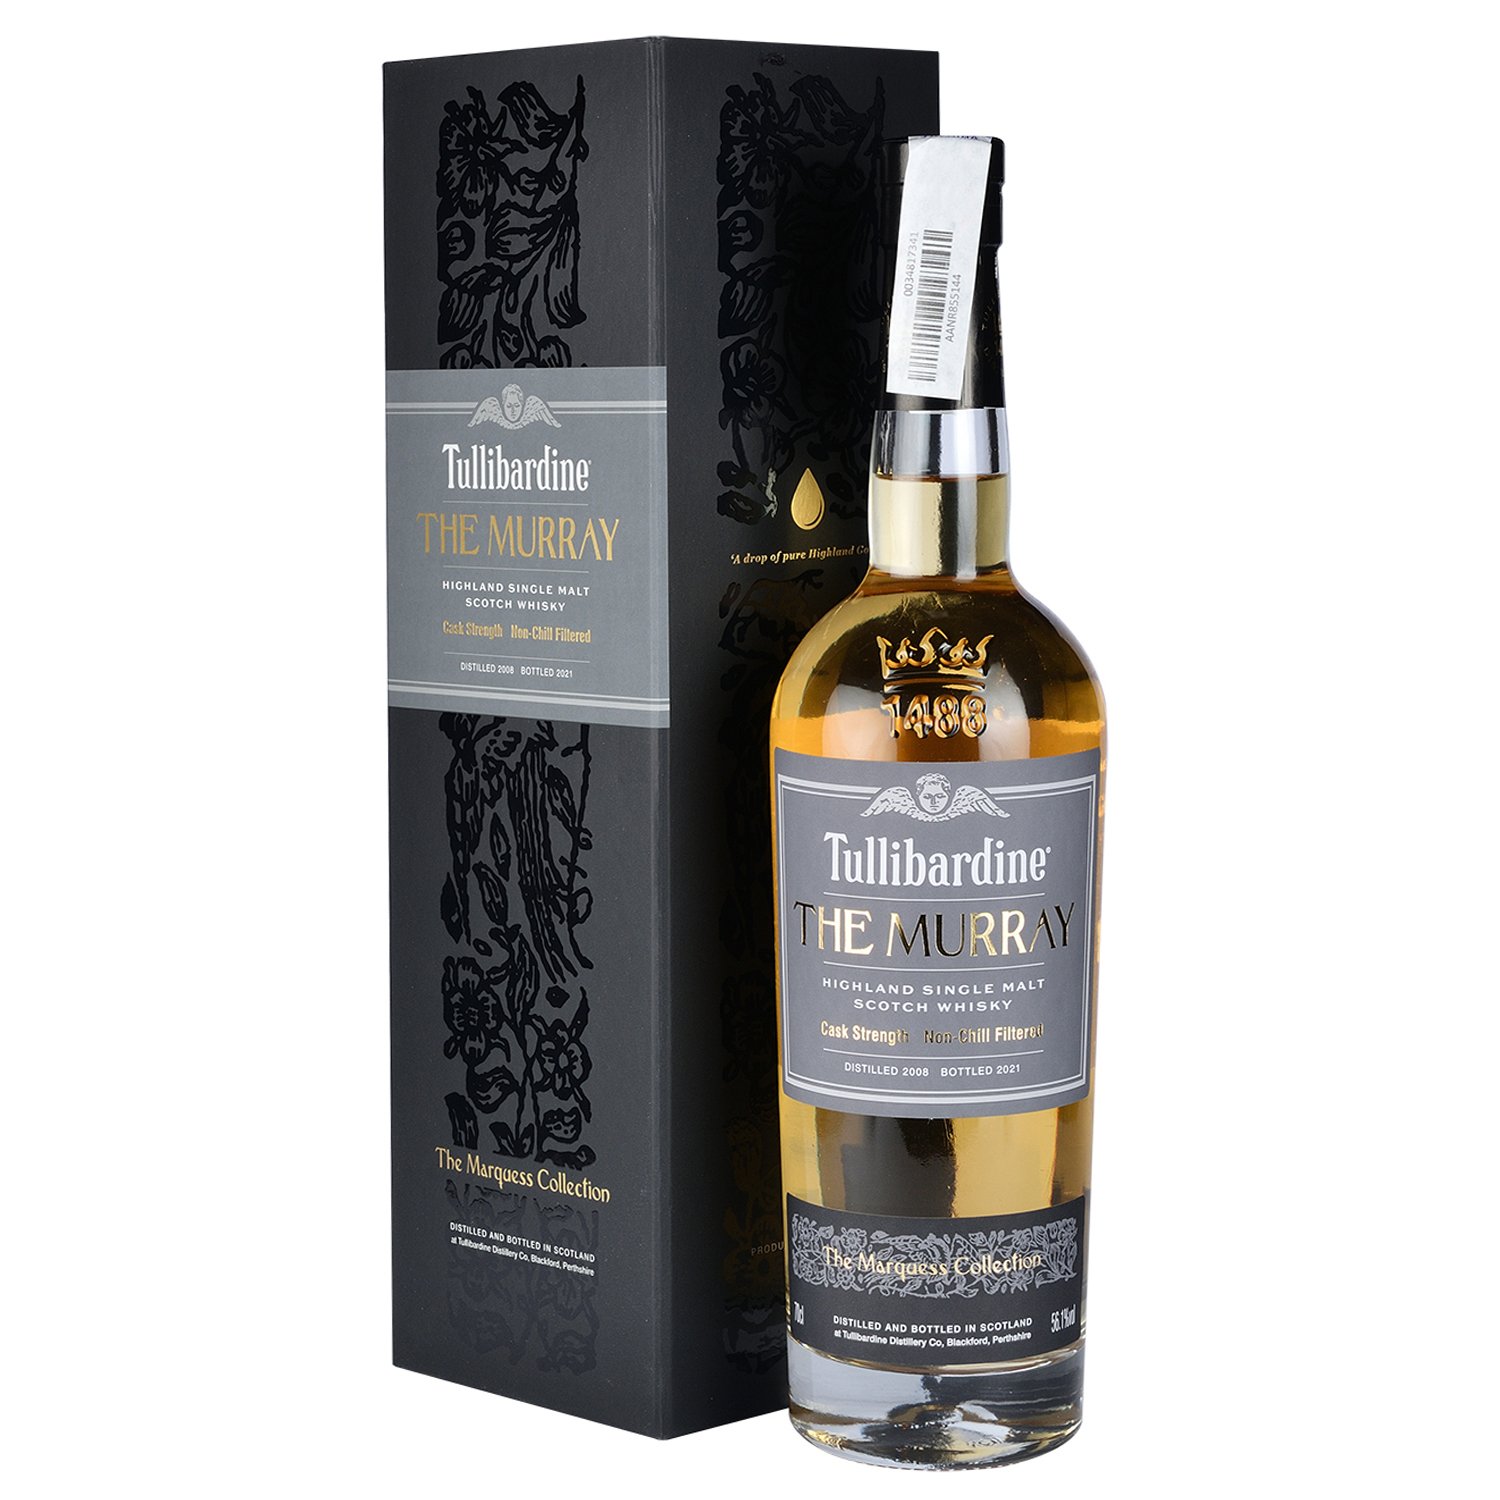 Виски Tullibardine The Murray Single Malt Scotch Whisky 2008 56.1% 0.7 л в подарочной упаковке - фото 1